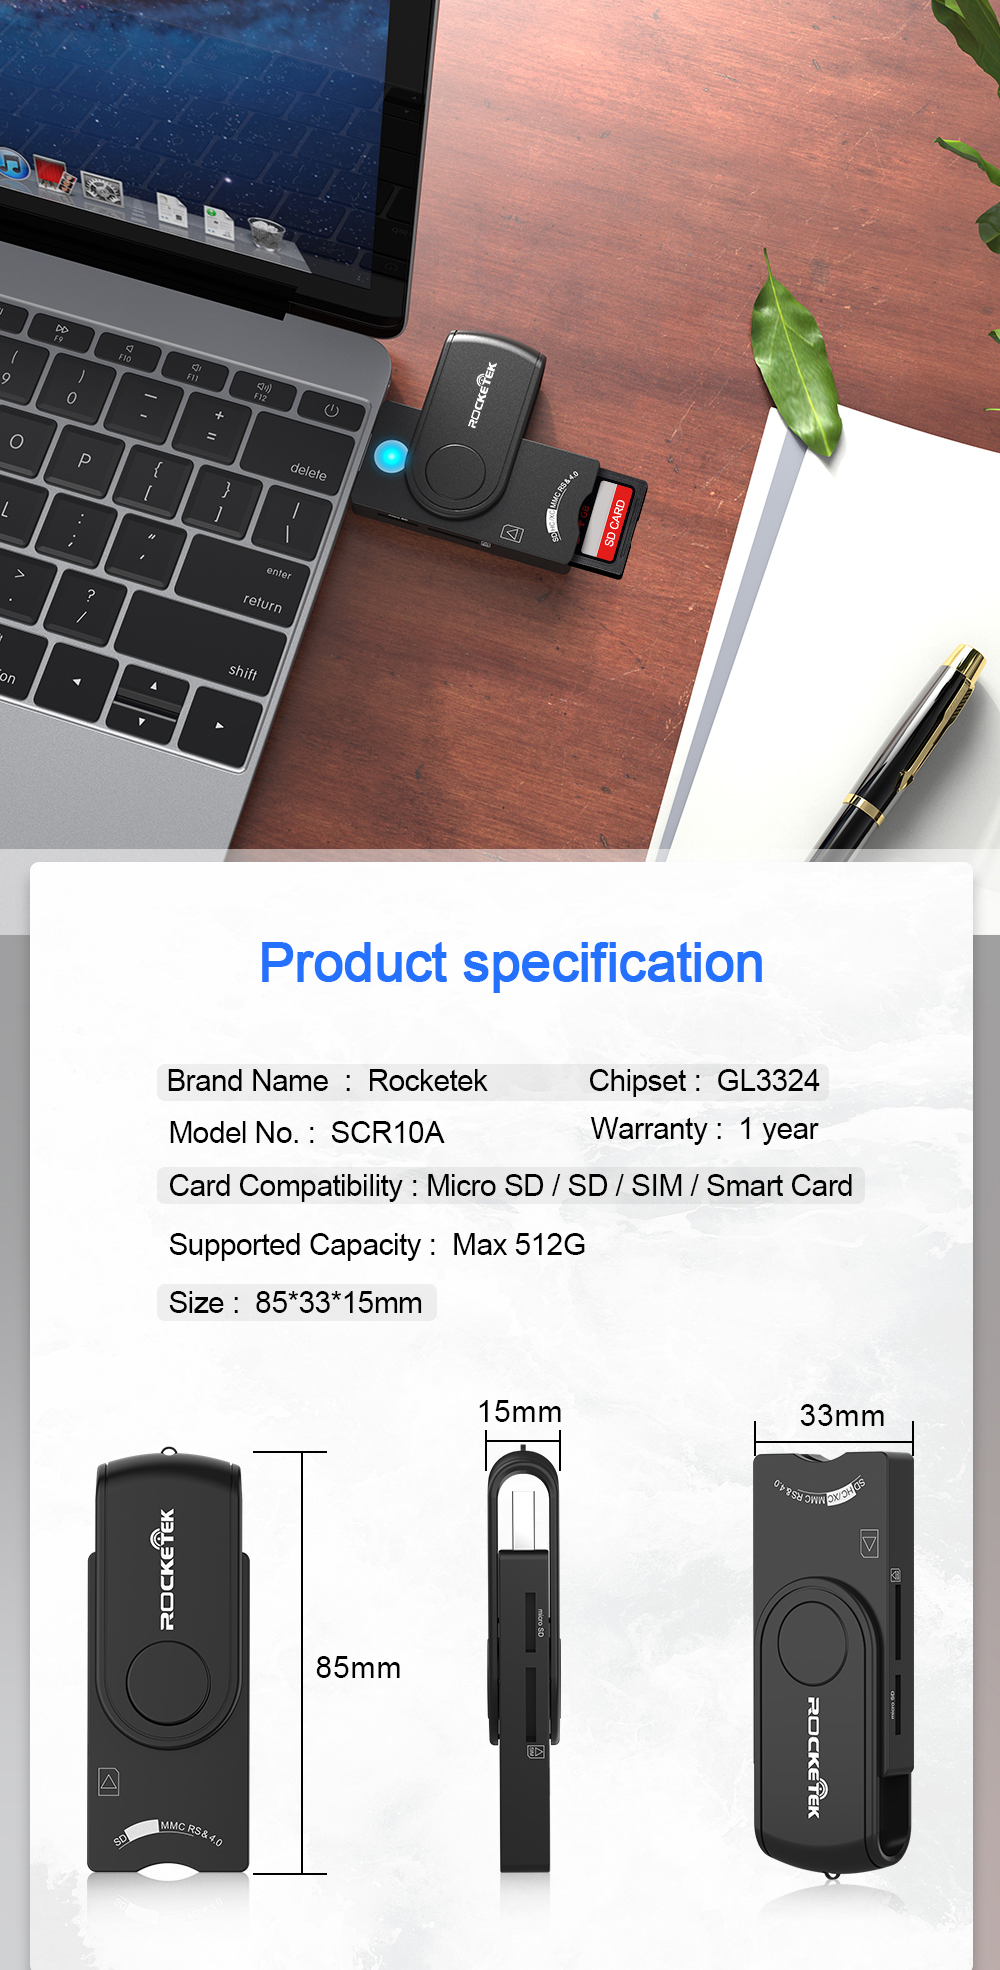 Rocketek-USB20-Card-Reader-SD-TF-Memory-Card-ID-Bank-EMV-4-In-1-Smart-Card-Reader-4-In-1-1743938-5